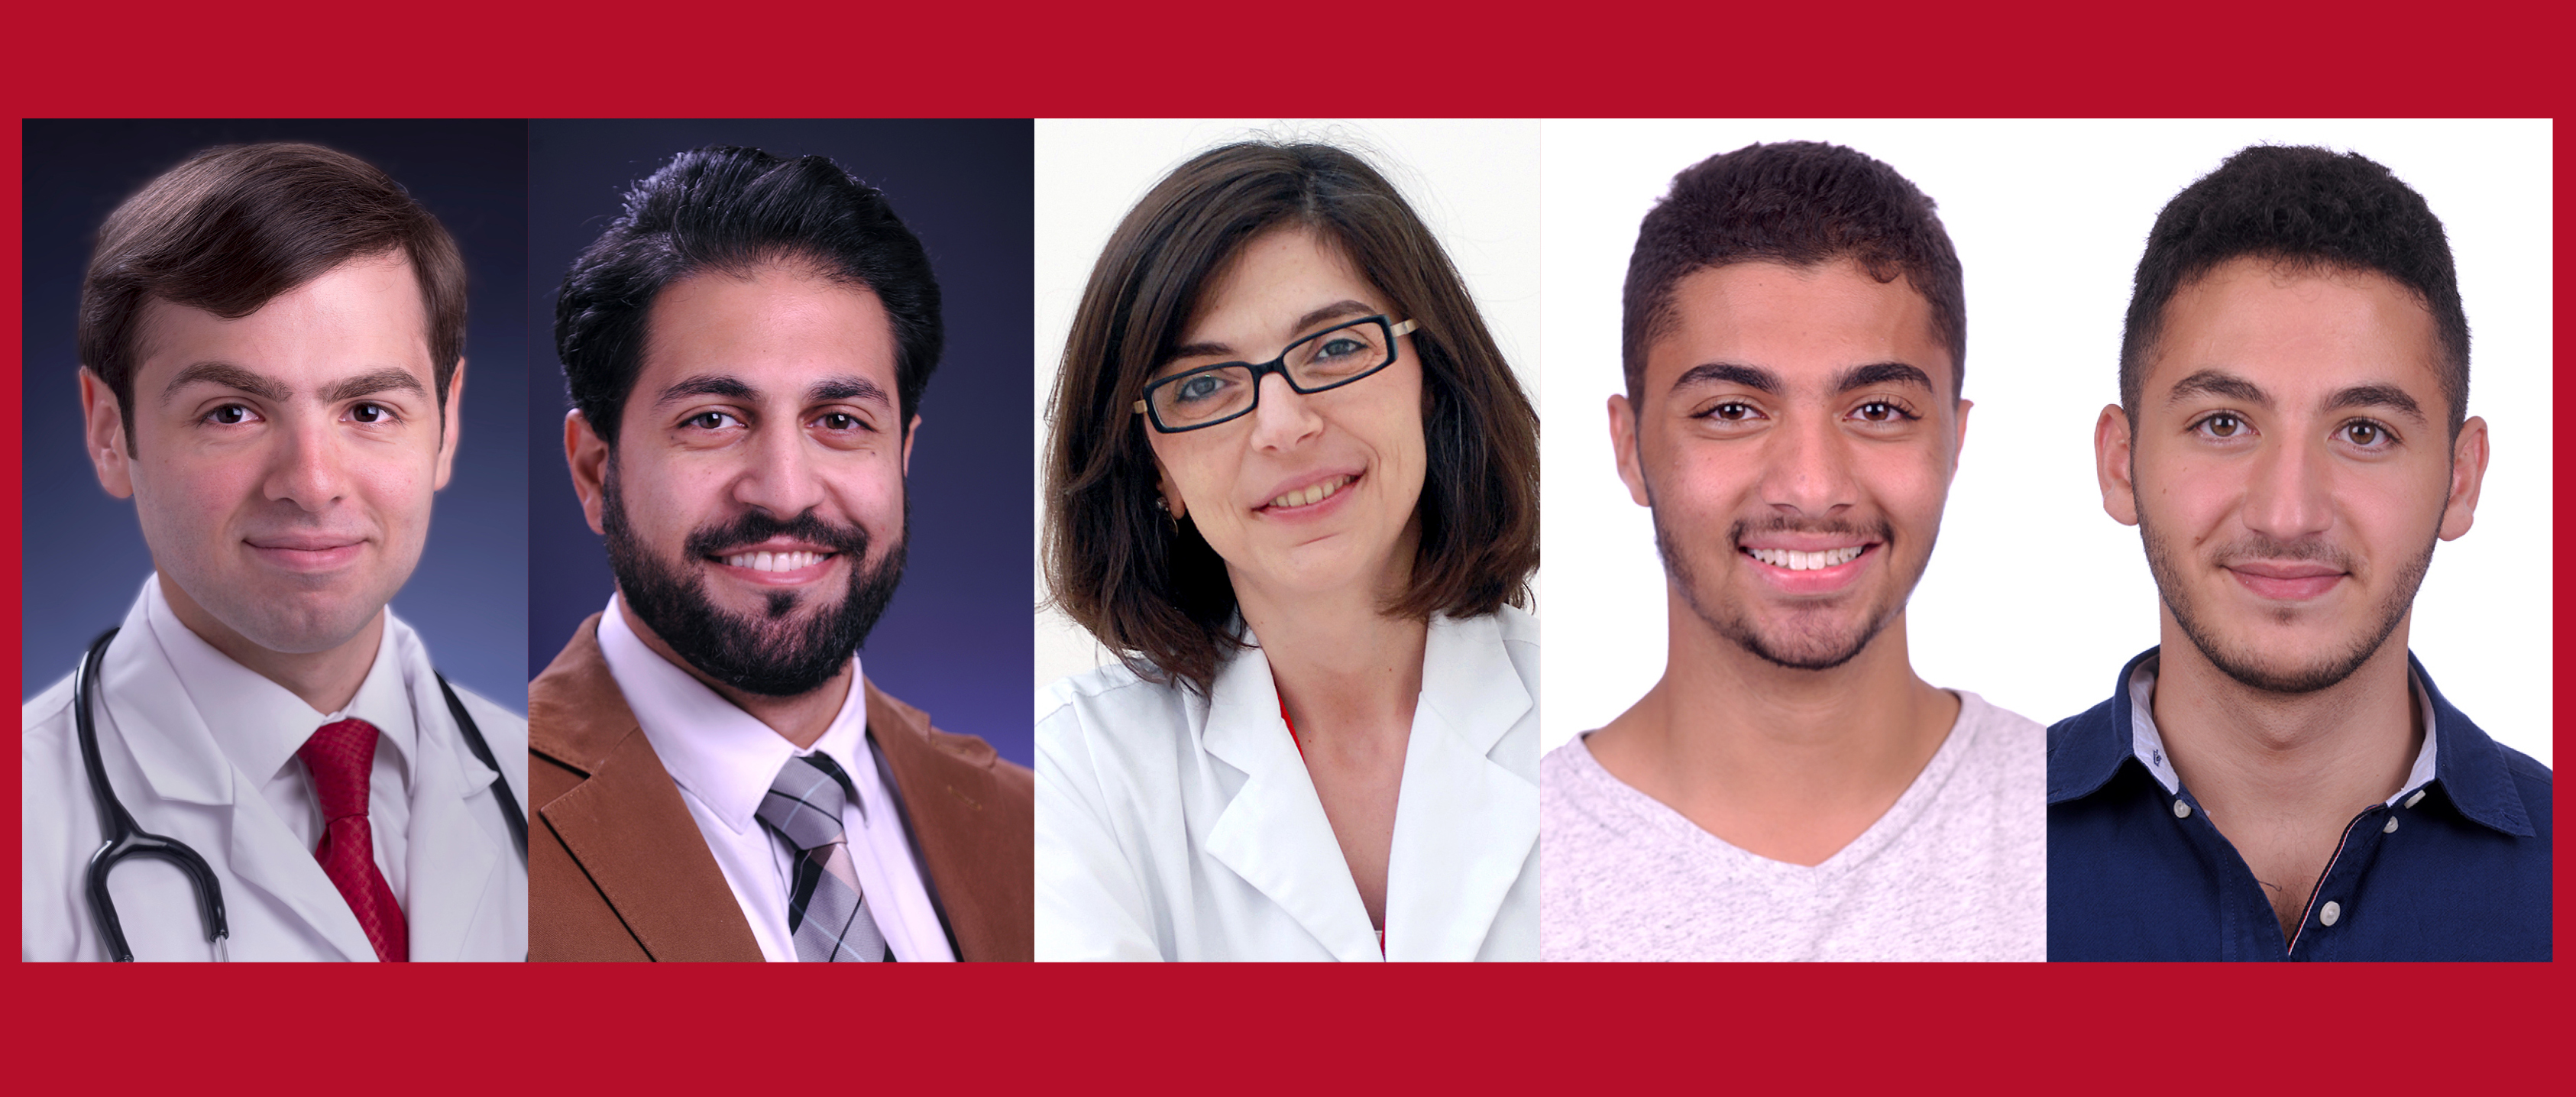 Dr. Karim Bayoumy, Dr. Mohamed Elshazly, Dr. Thurayya Arayssi, Abdallah El Shafy and Omar Mehaimeed.